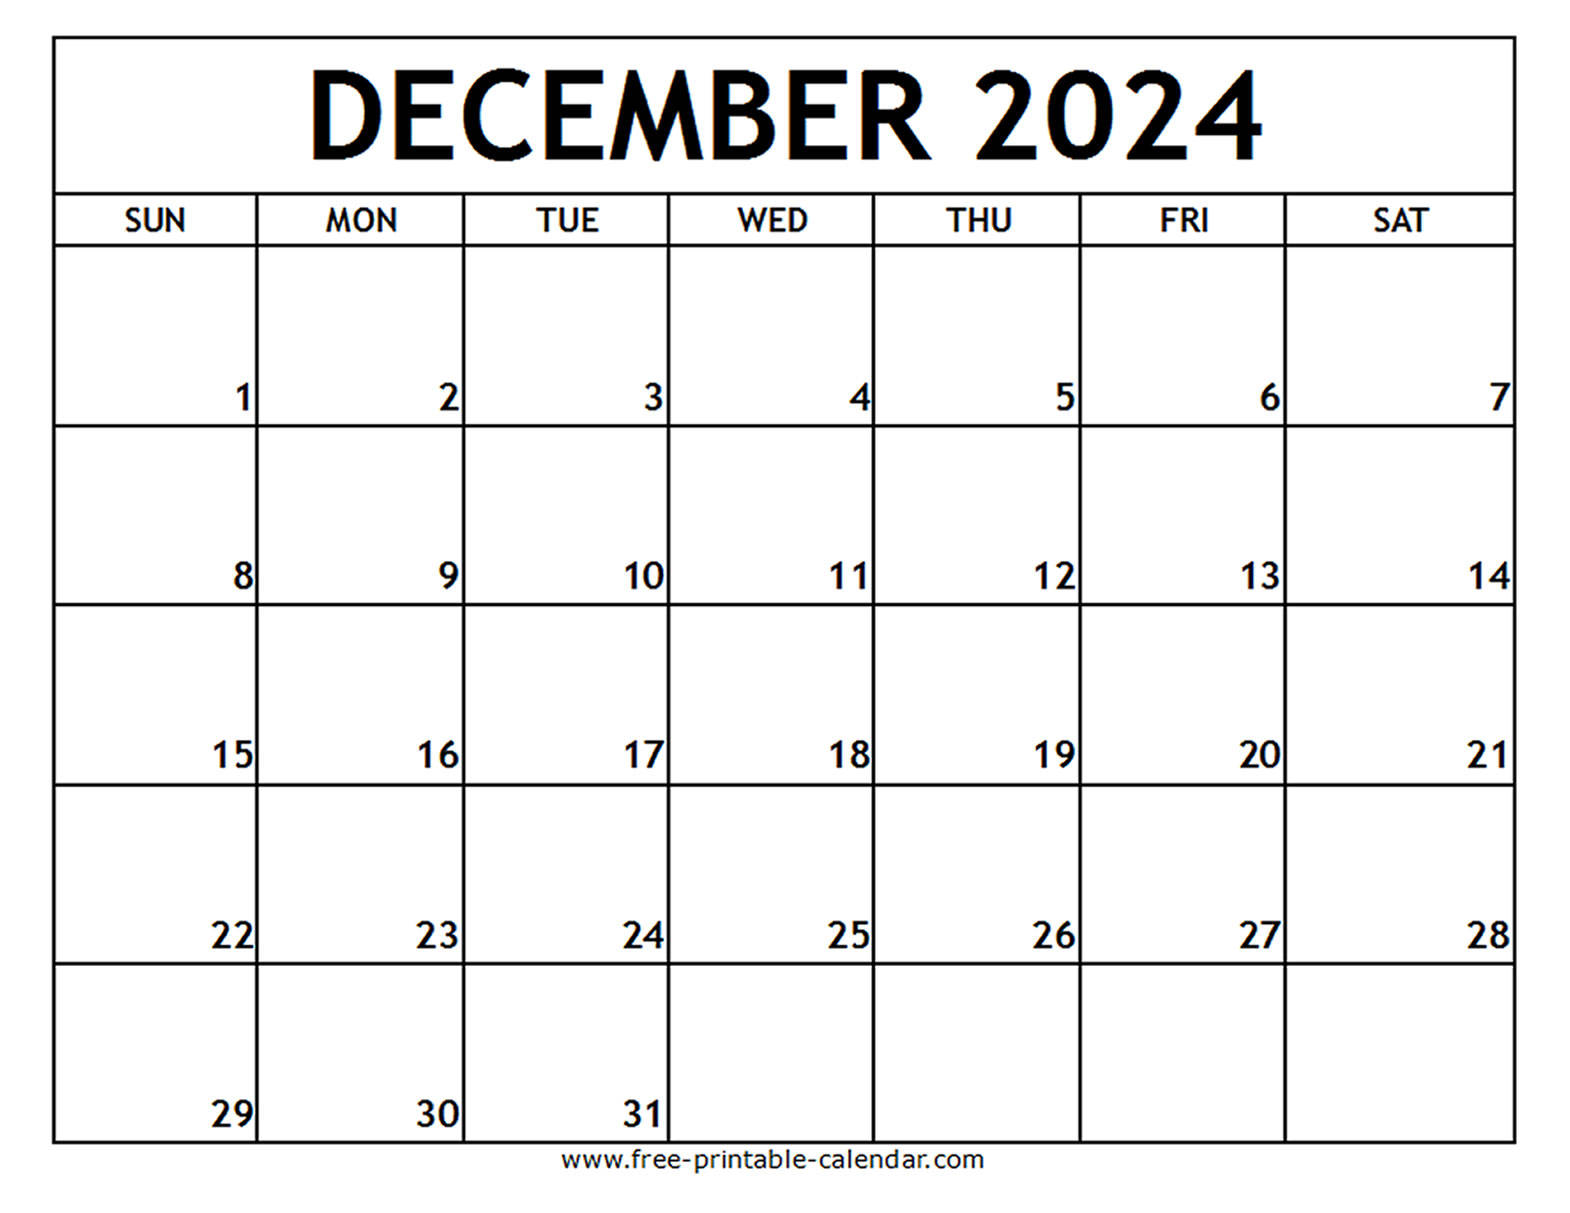 Blank Calendar Dec 2024 Pdf Free Printable December 2024 Calendar